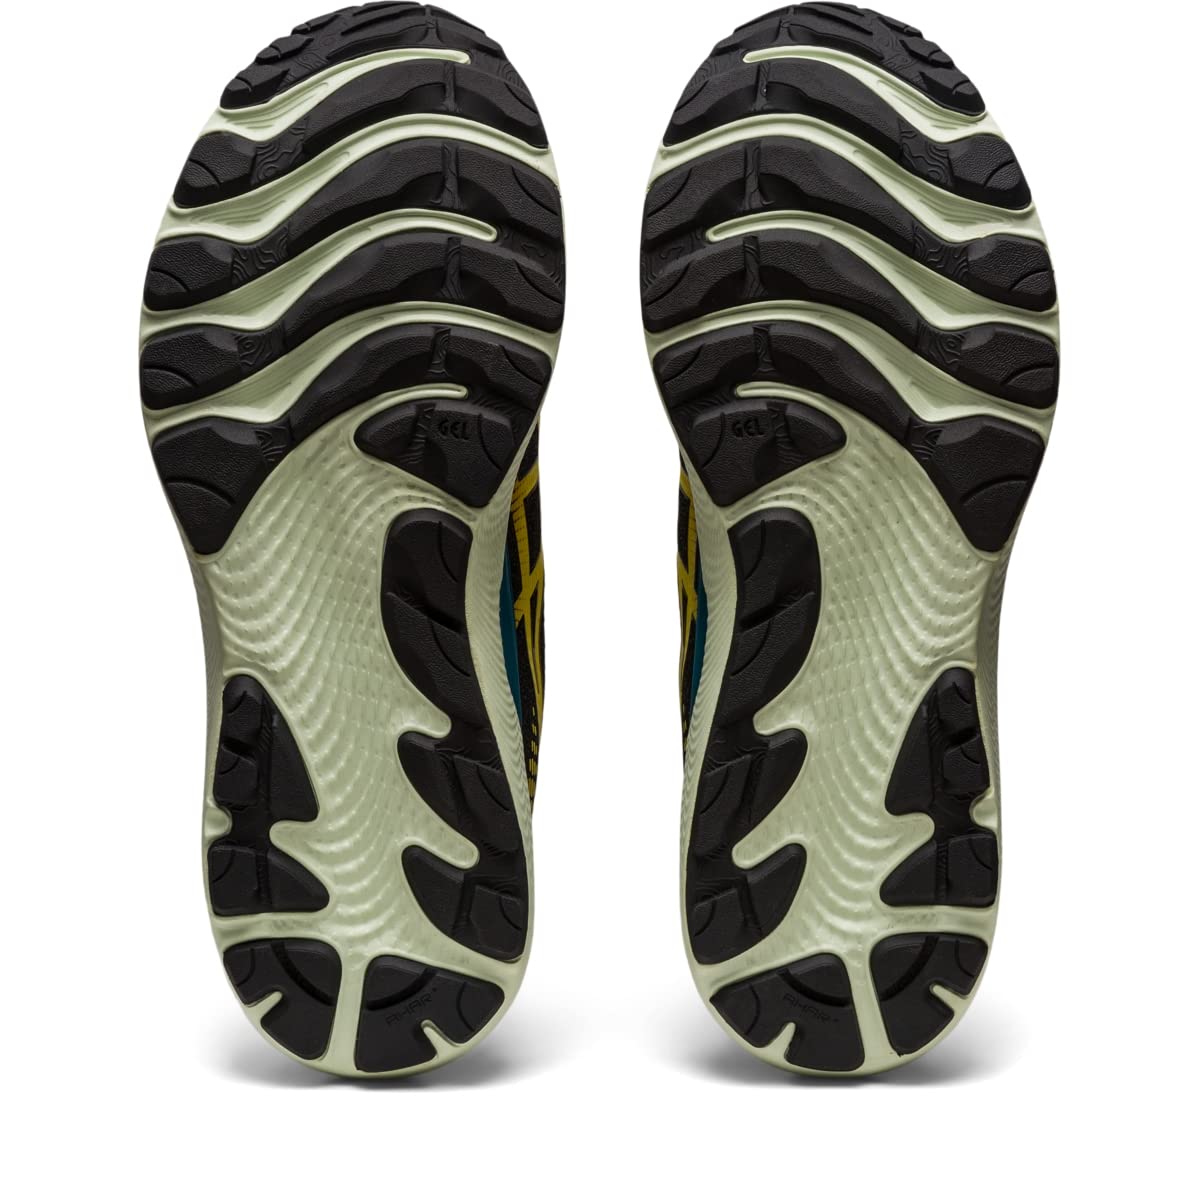 ASICS Men's Gel-Cumulus 24 Trail Running Shoes